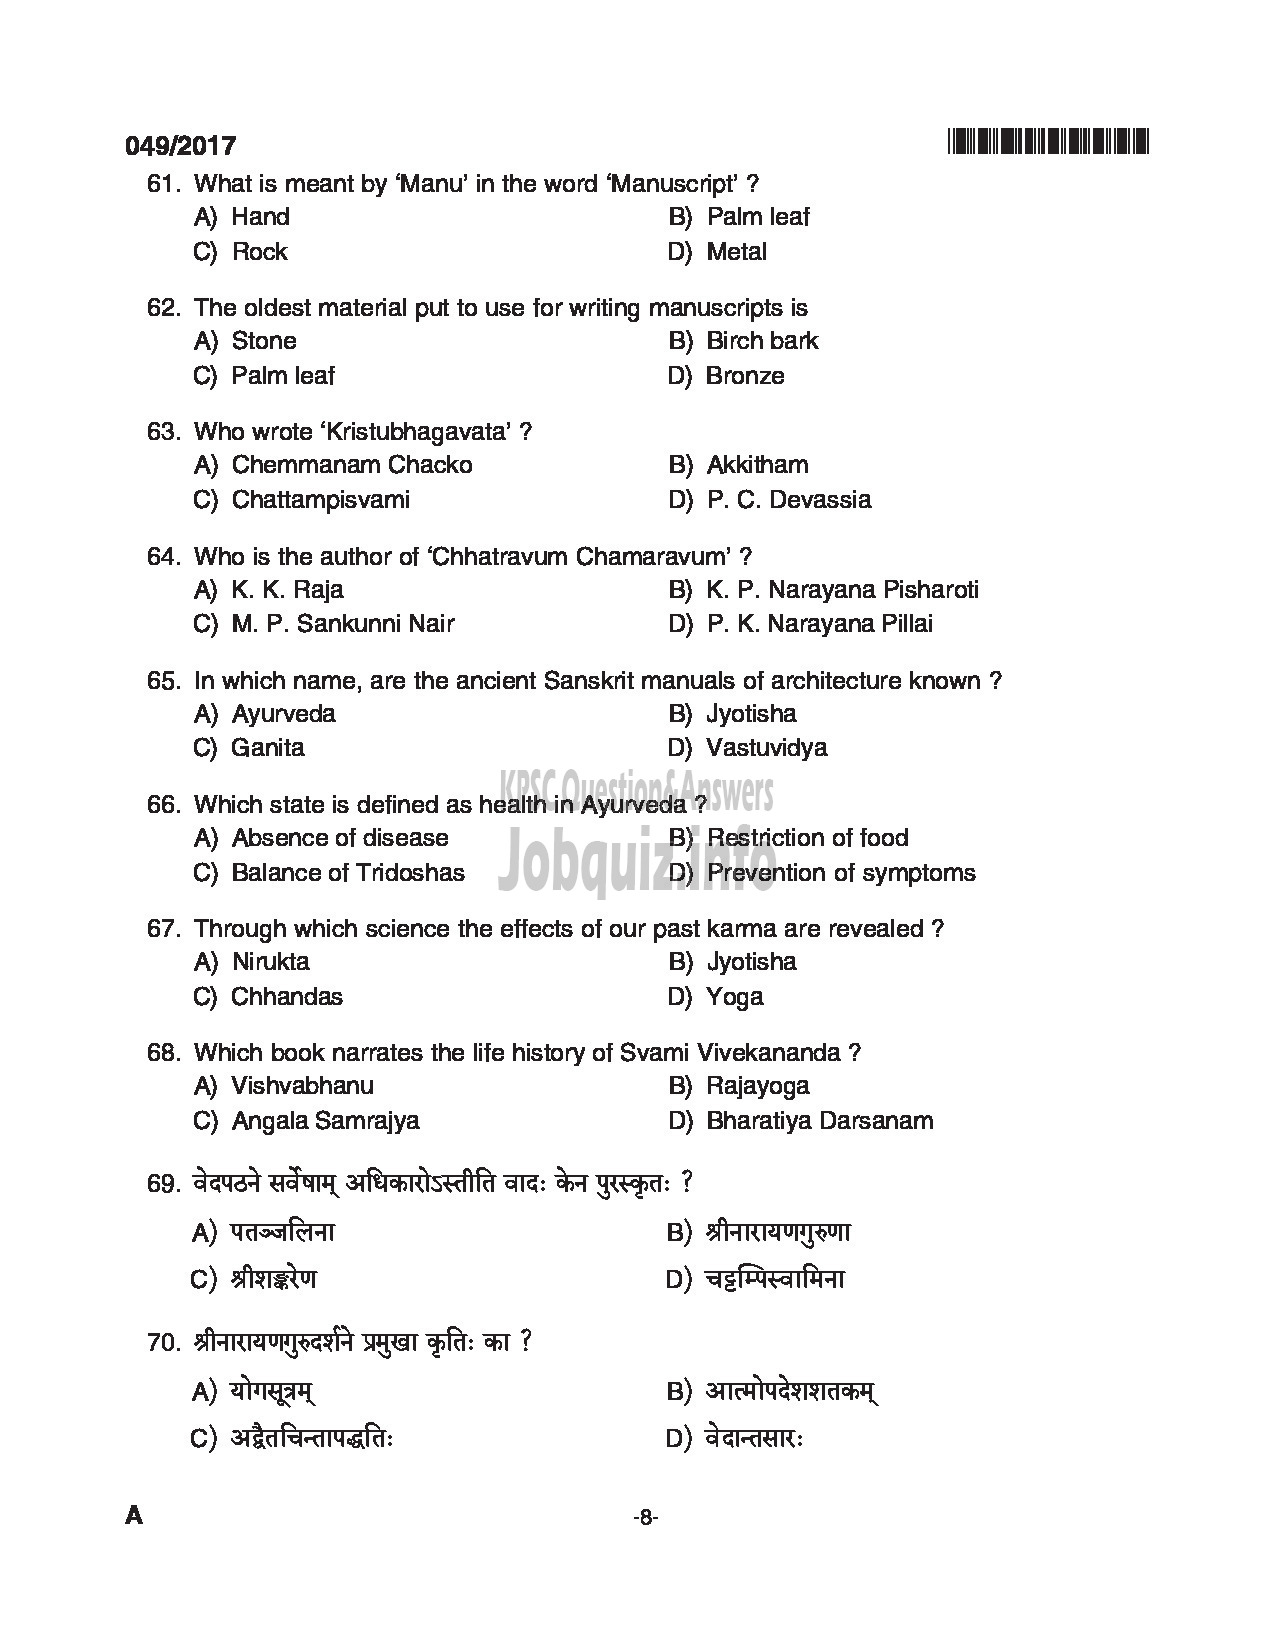 Kerala PSC Question Paper - LECTURER IN SANSKRIT GENERAL COLLEGIATE EDN 133/2015-8